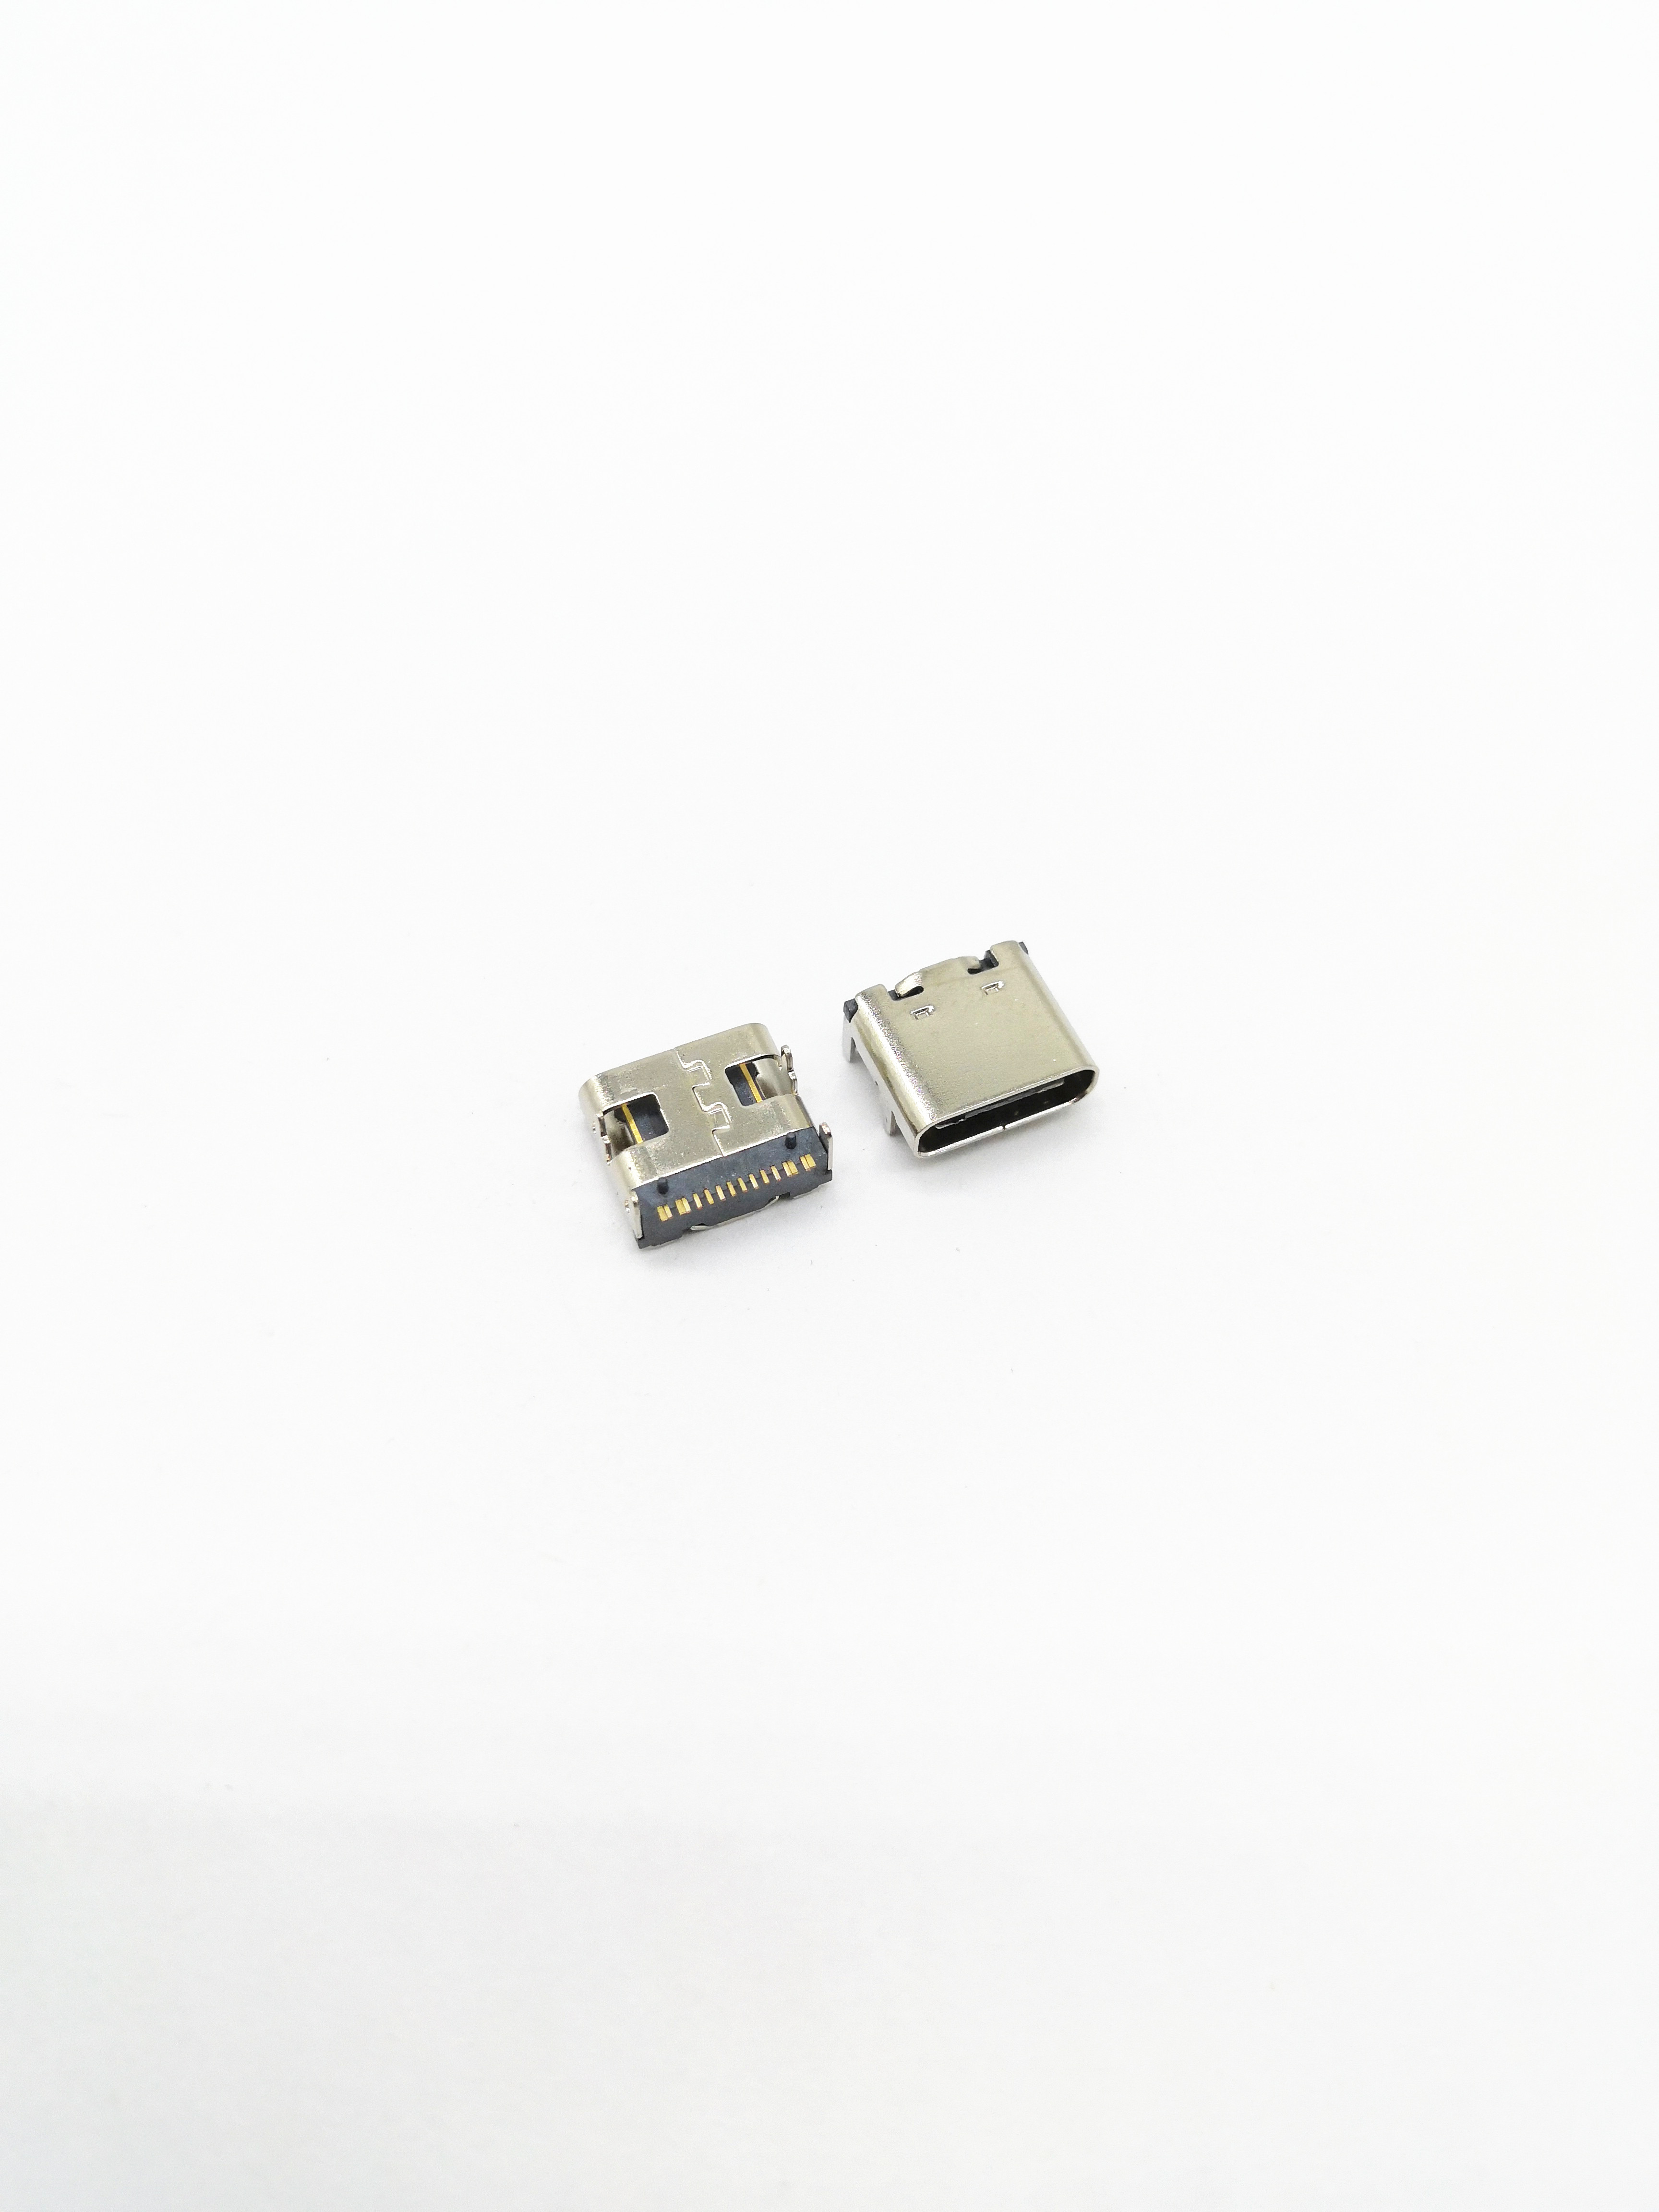 10· USB3.1 CF 16Pin 单排贴片SMT.jpg